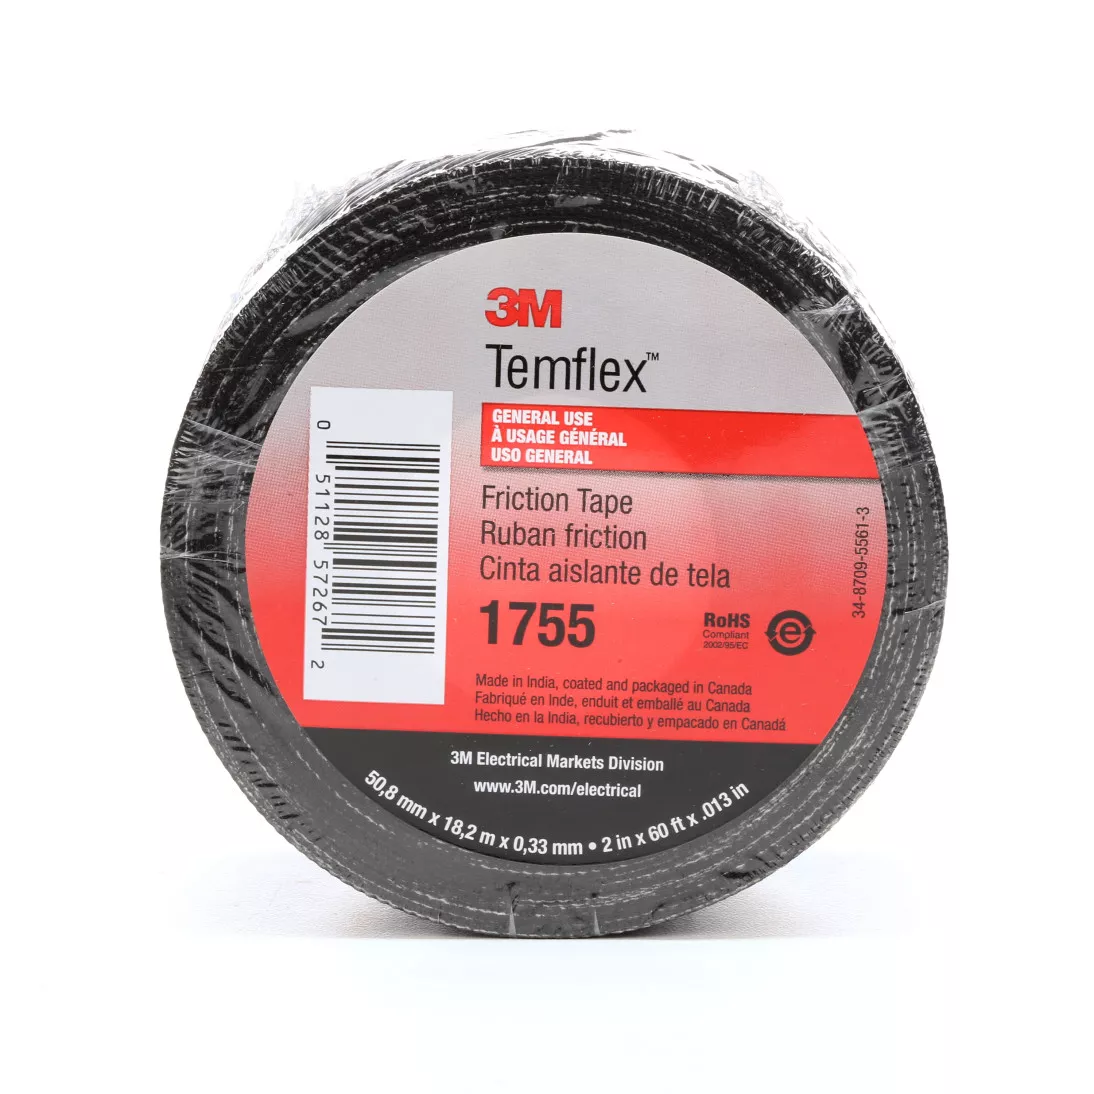 3M™ Temflex™ Cotton Friction Tape 1755, 2 in x 60 ft, Black, 30
rolls/Case